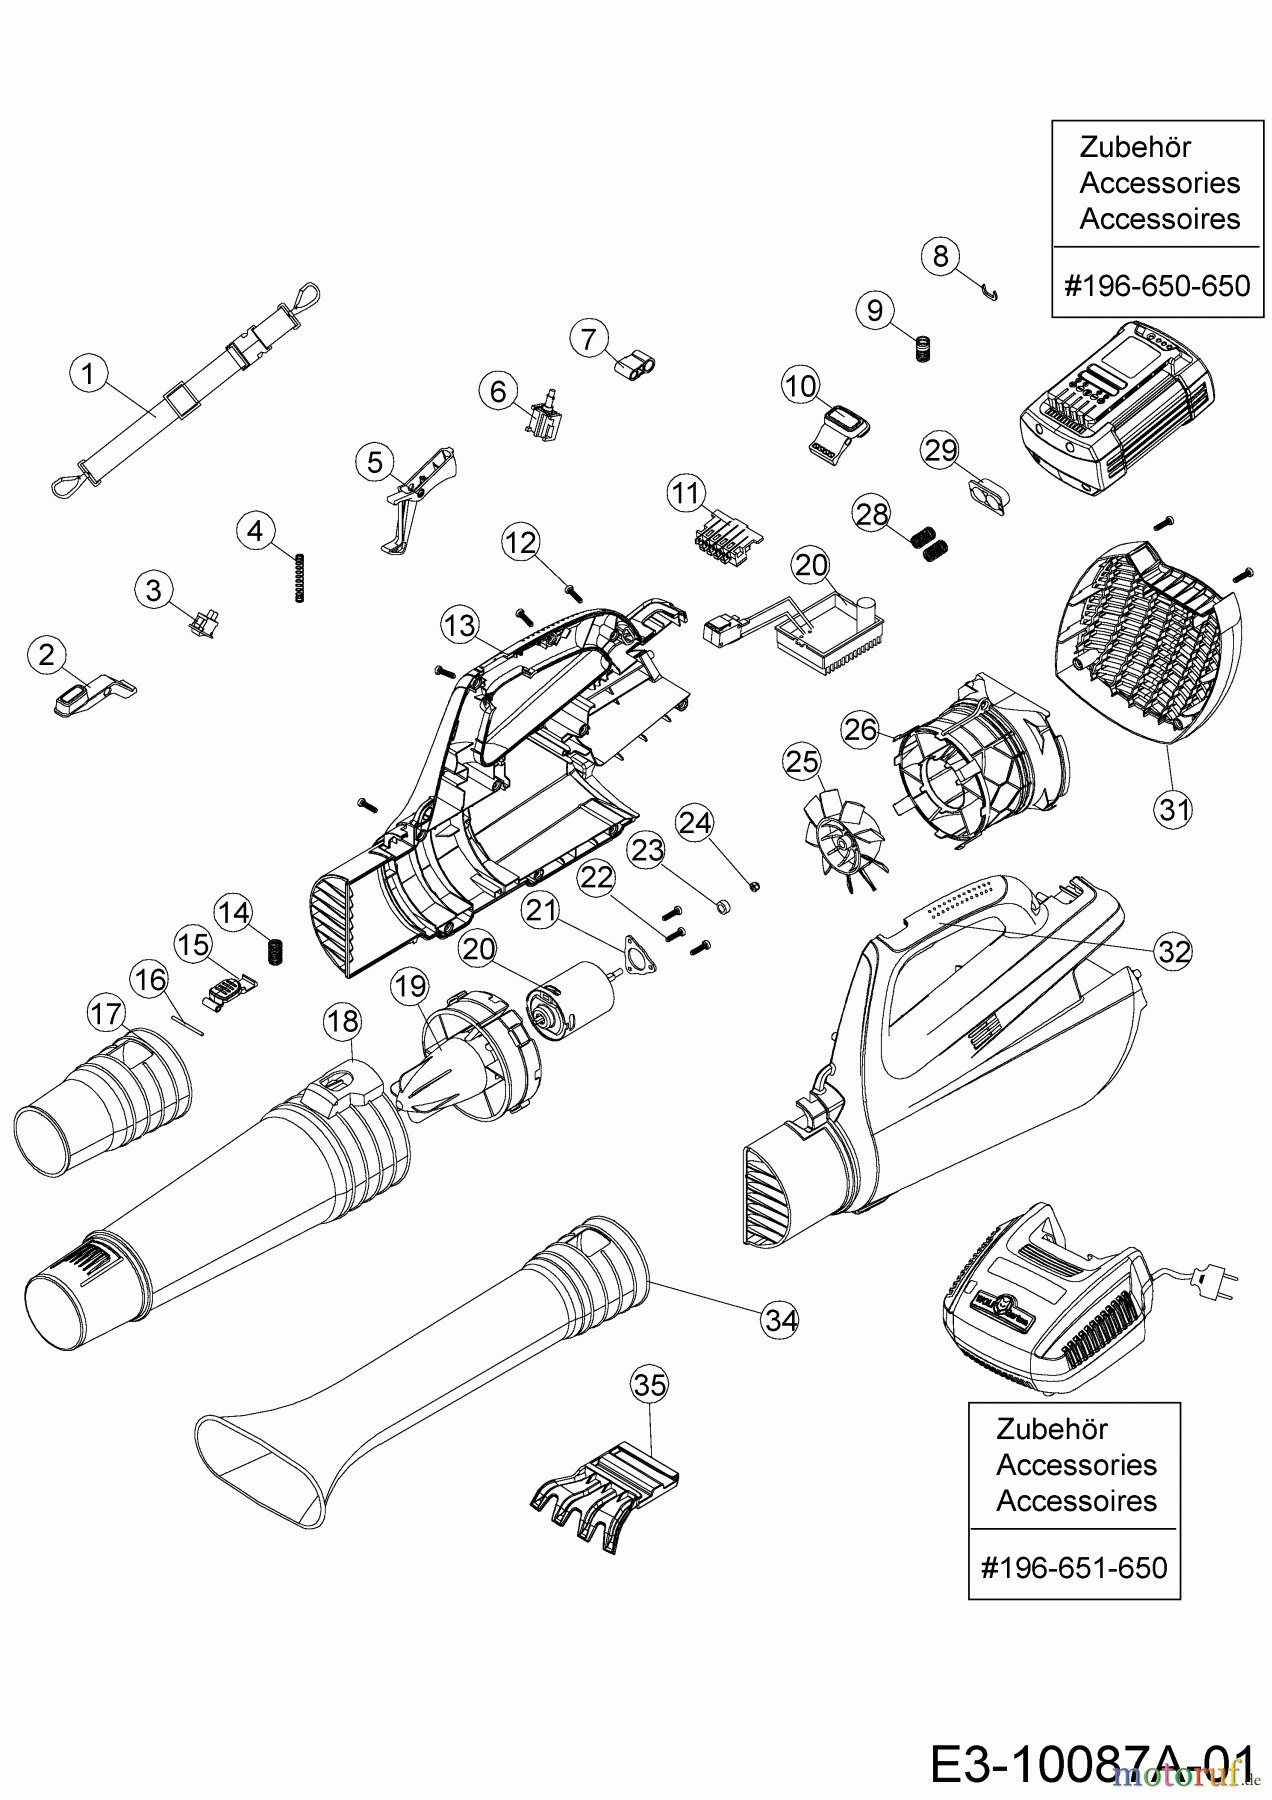  Wolf-Garten battery leaf blower 72V Li-Ion Power 24 B 41AA0BN-650  (2020) Basic machine